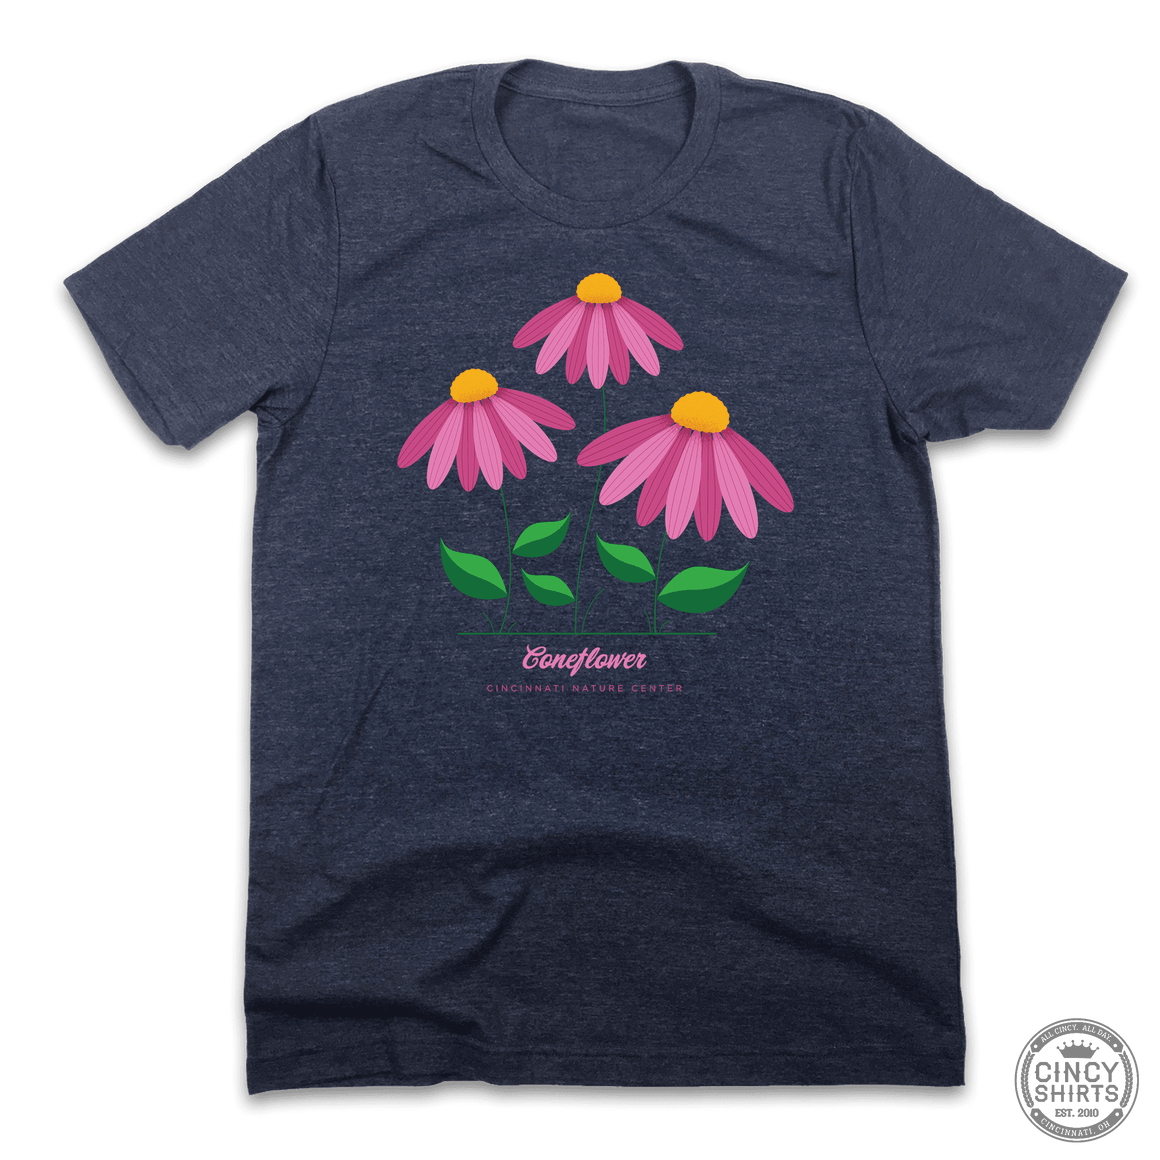 Coneflower - Cincinnati Nature Center - Cincy Shirts